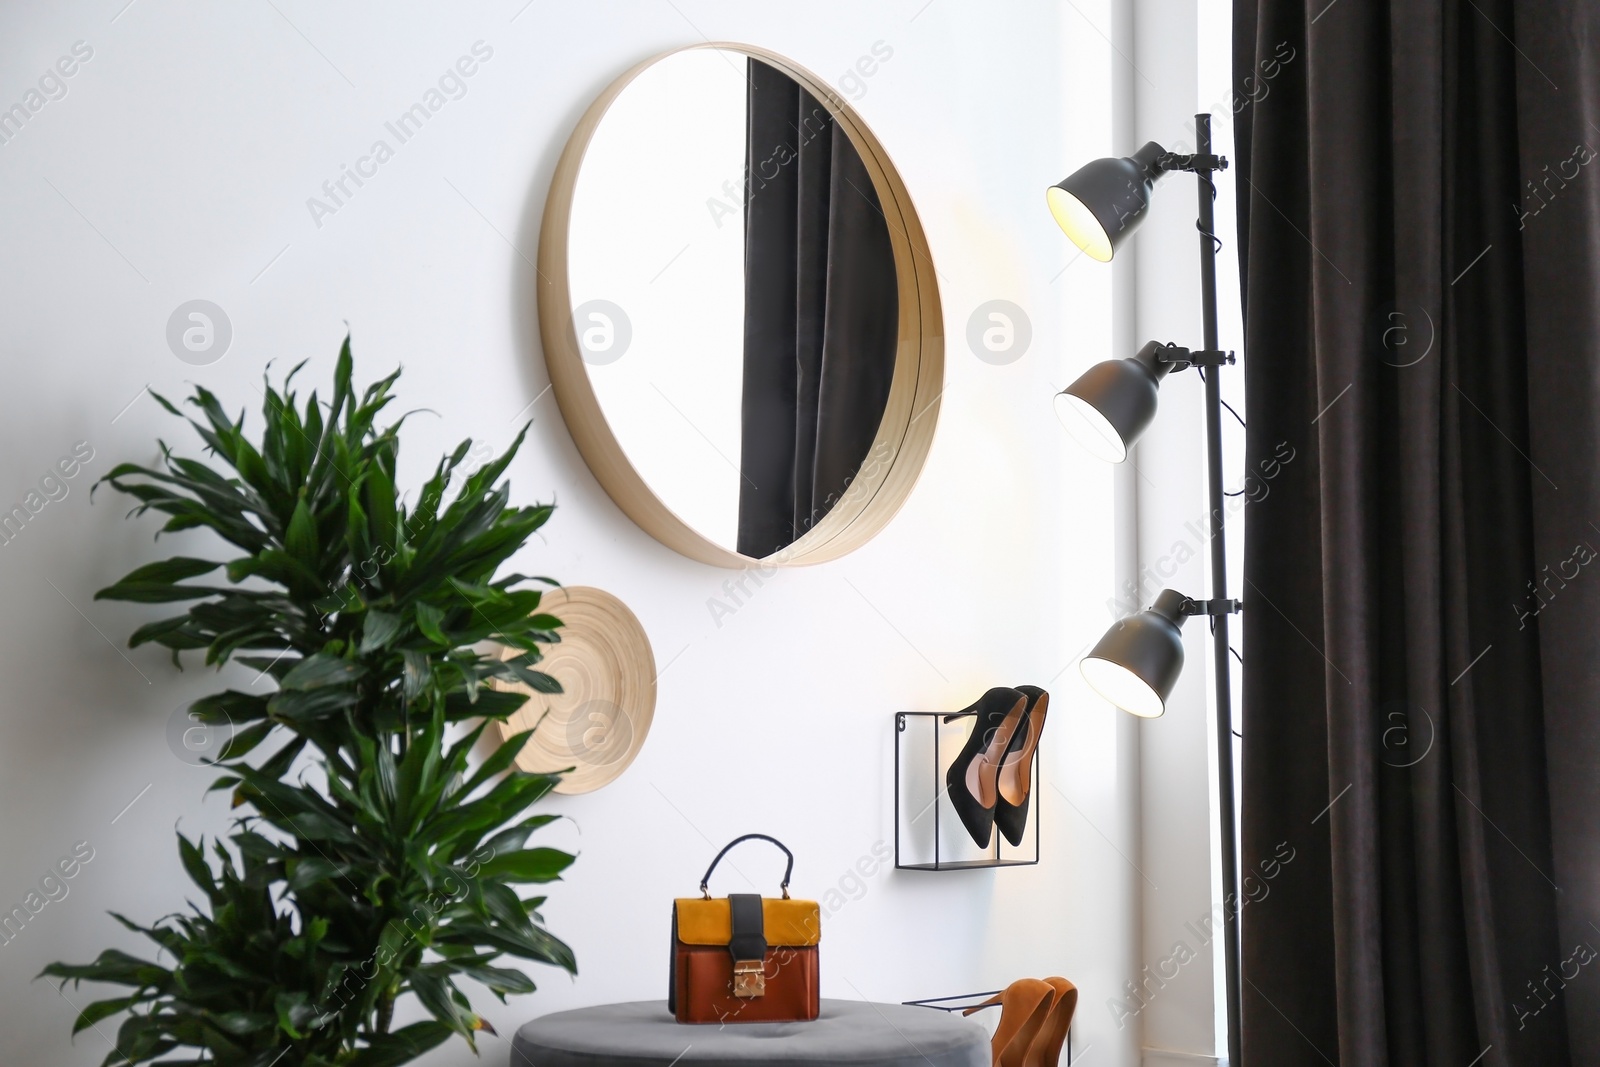 Photo of Big round mirror, houseplant and decor near white wall in hallway interior